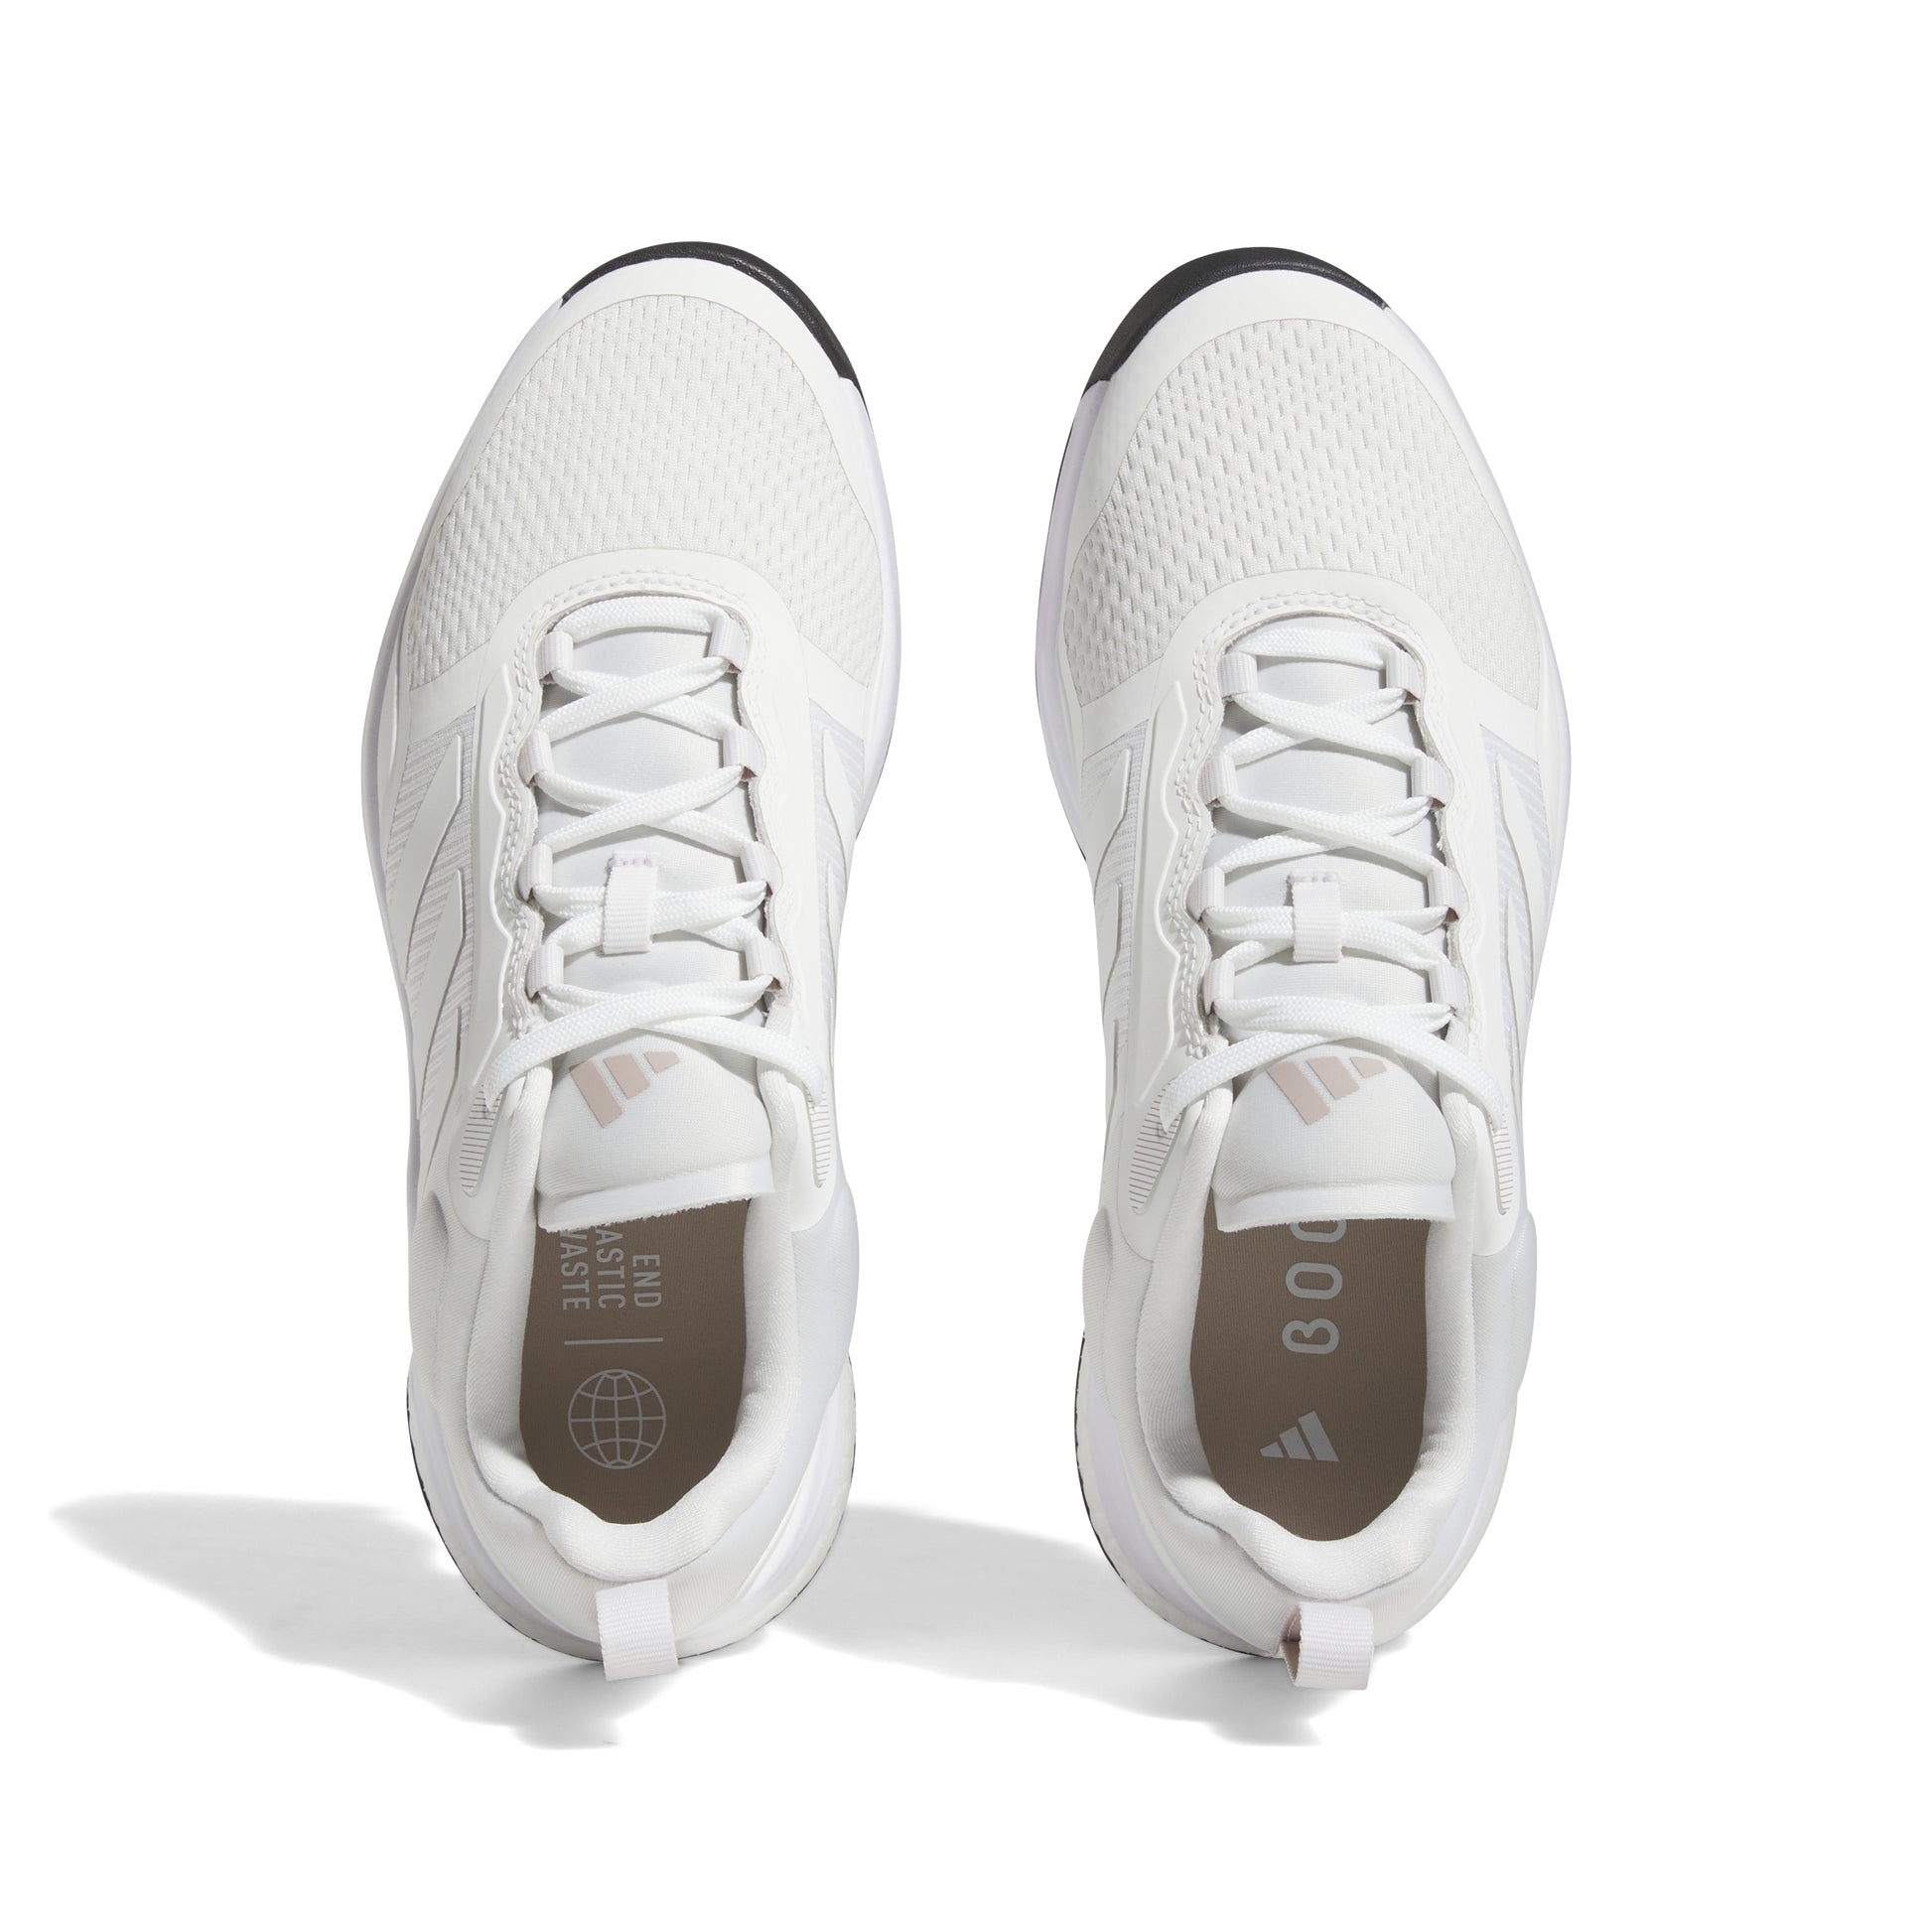 adidas Women's Spikeless Golf Shoe in White